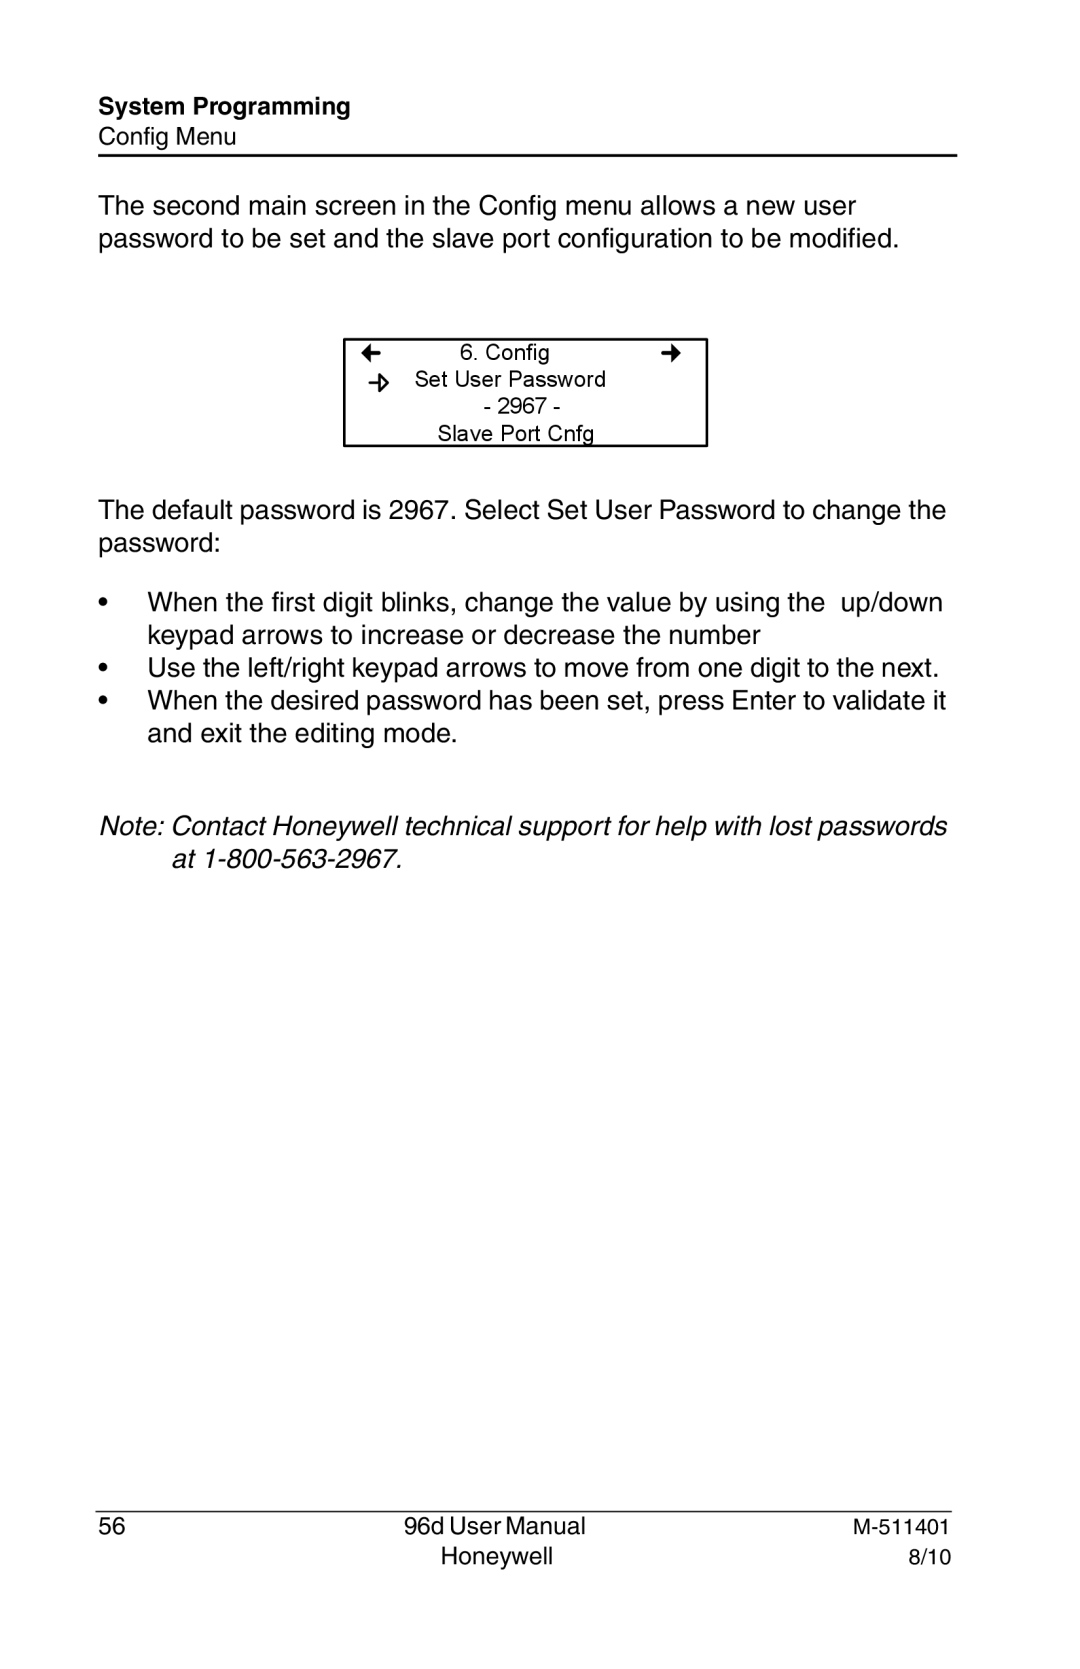 Honeywell 96D user manual Config Set User Password 2967 Slave Port Cnfg, M-511401, Honeywell, 8/10 